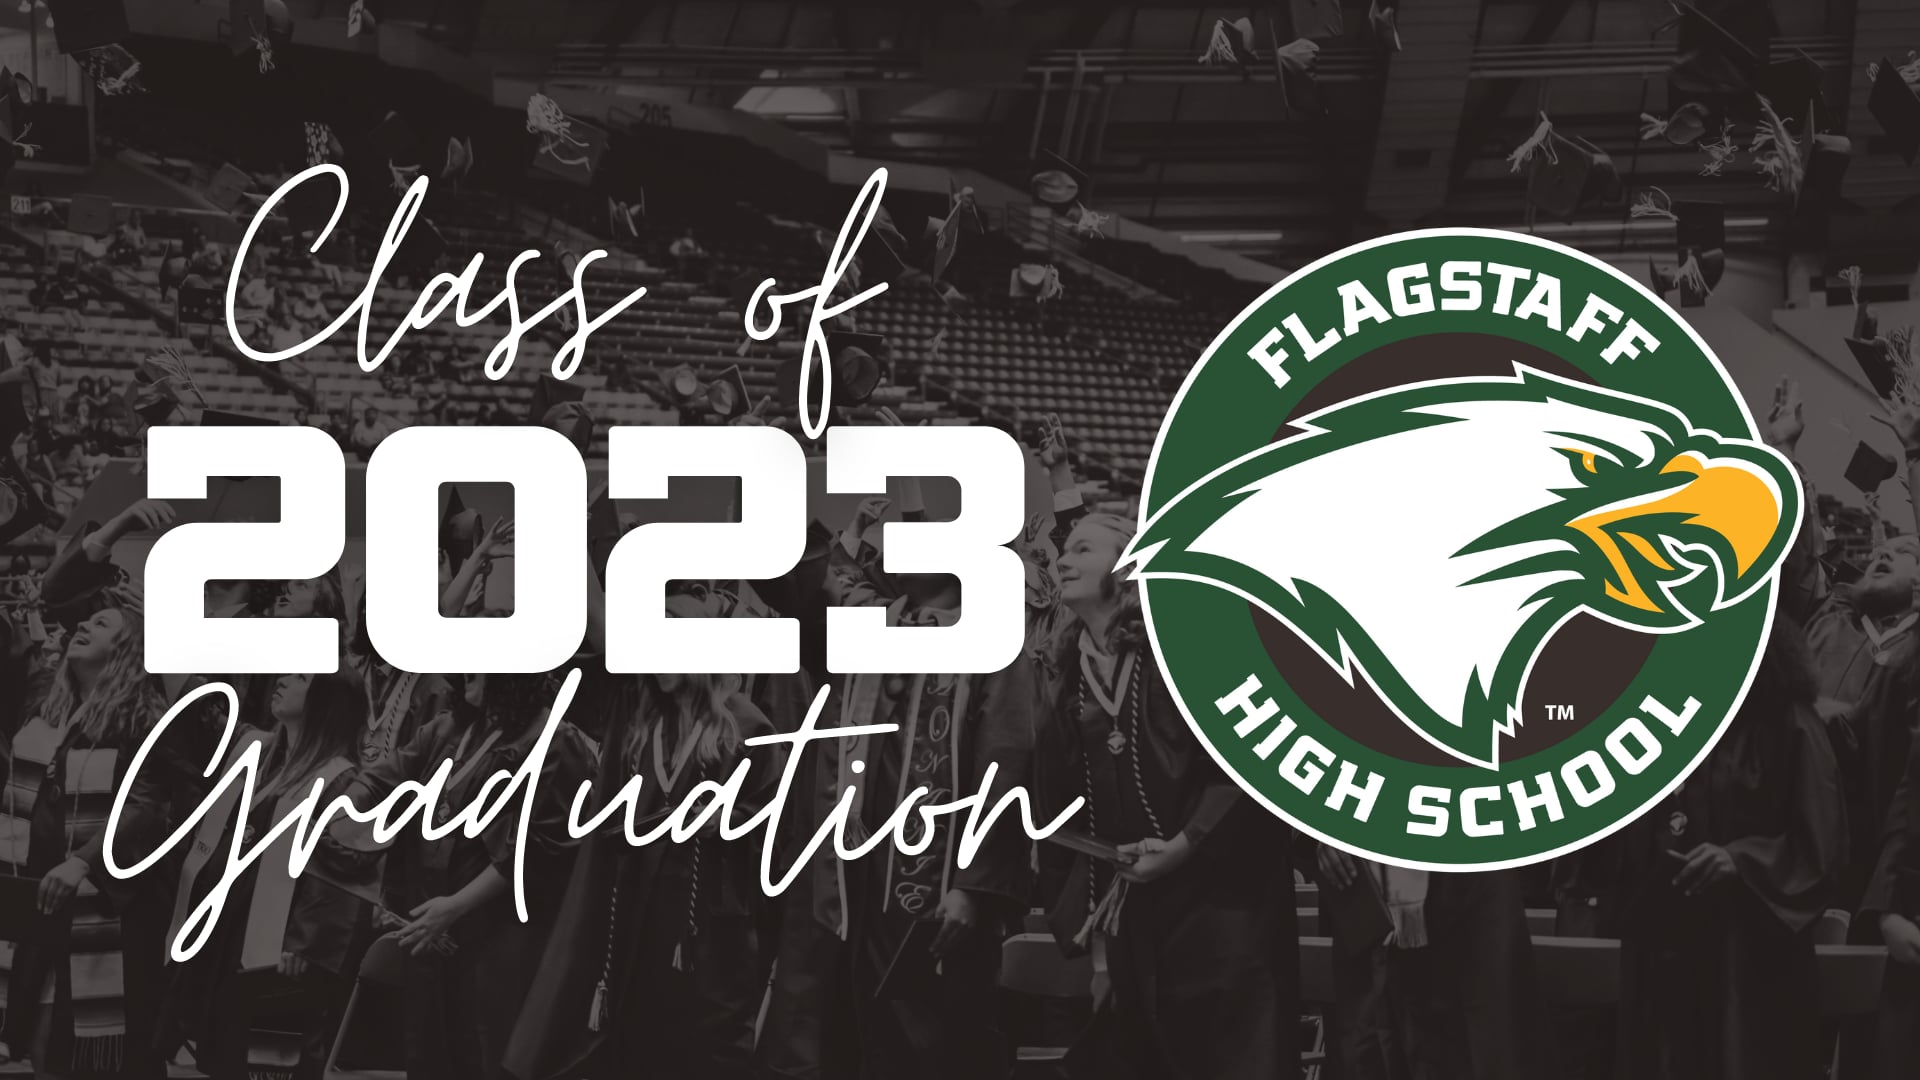 Flagstaff High School Graduation Ceremony 2023